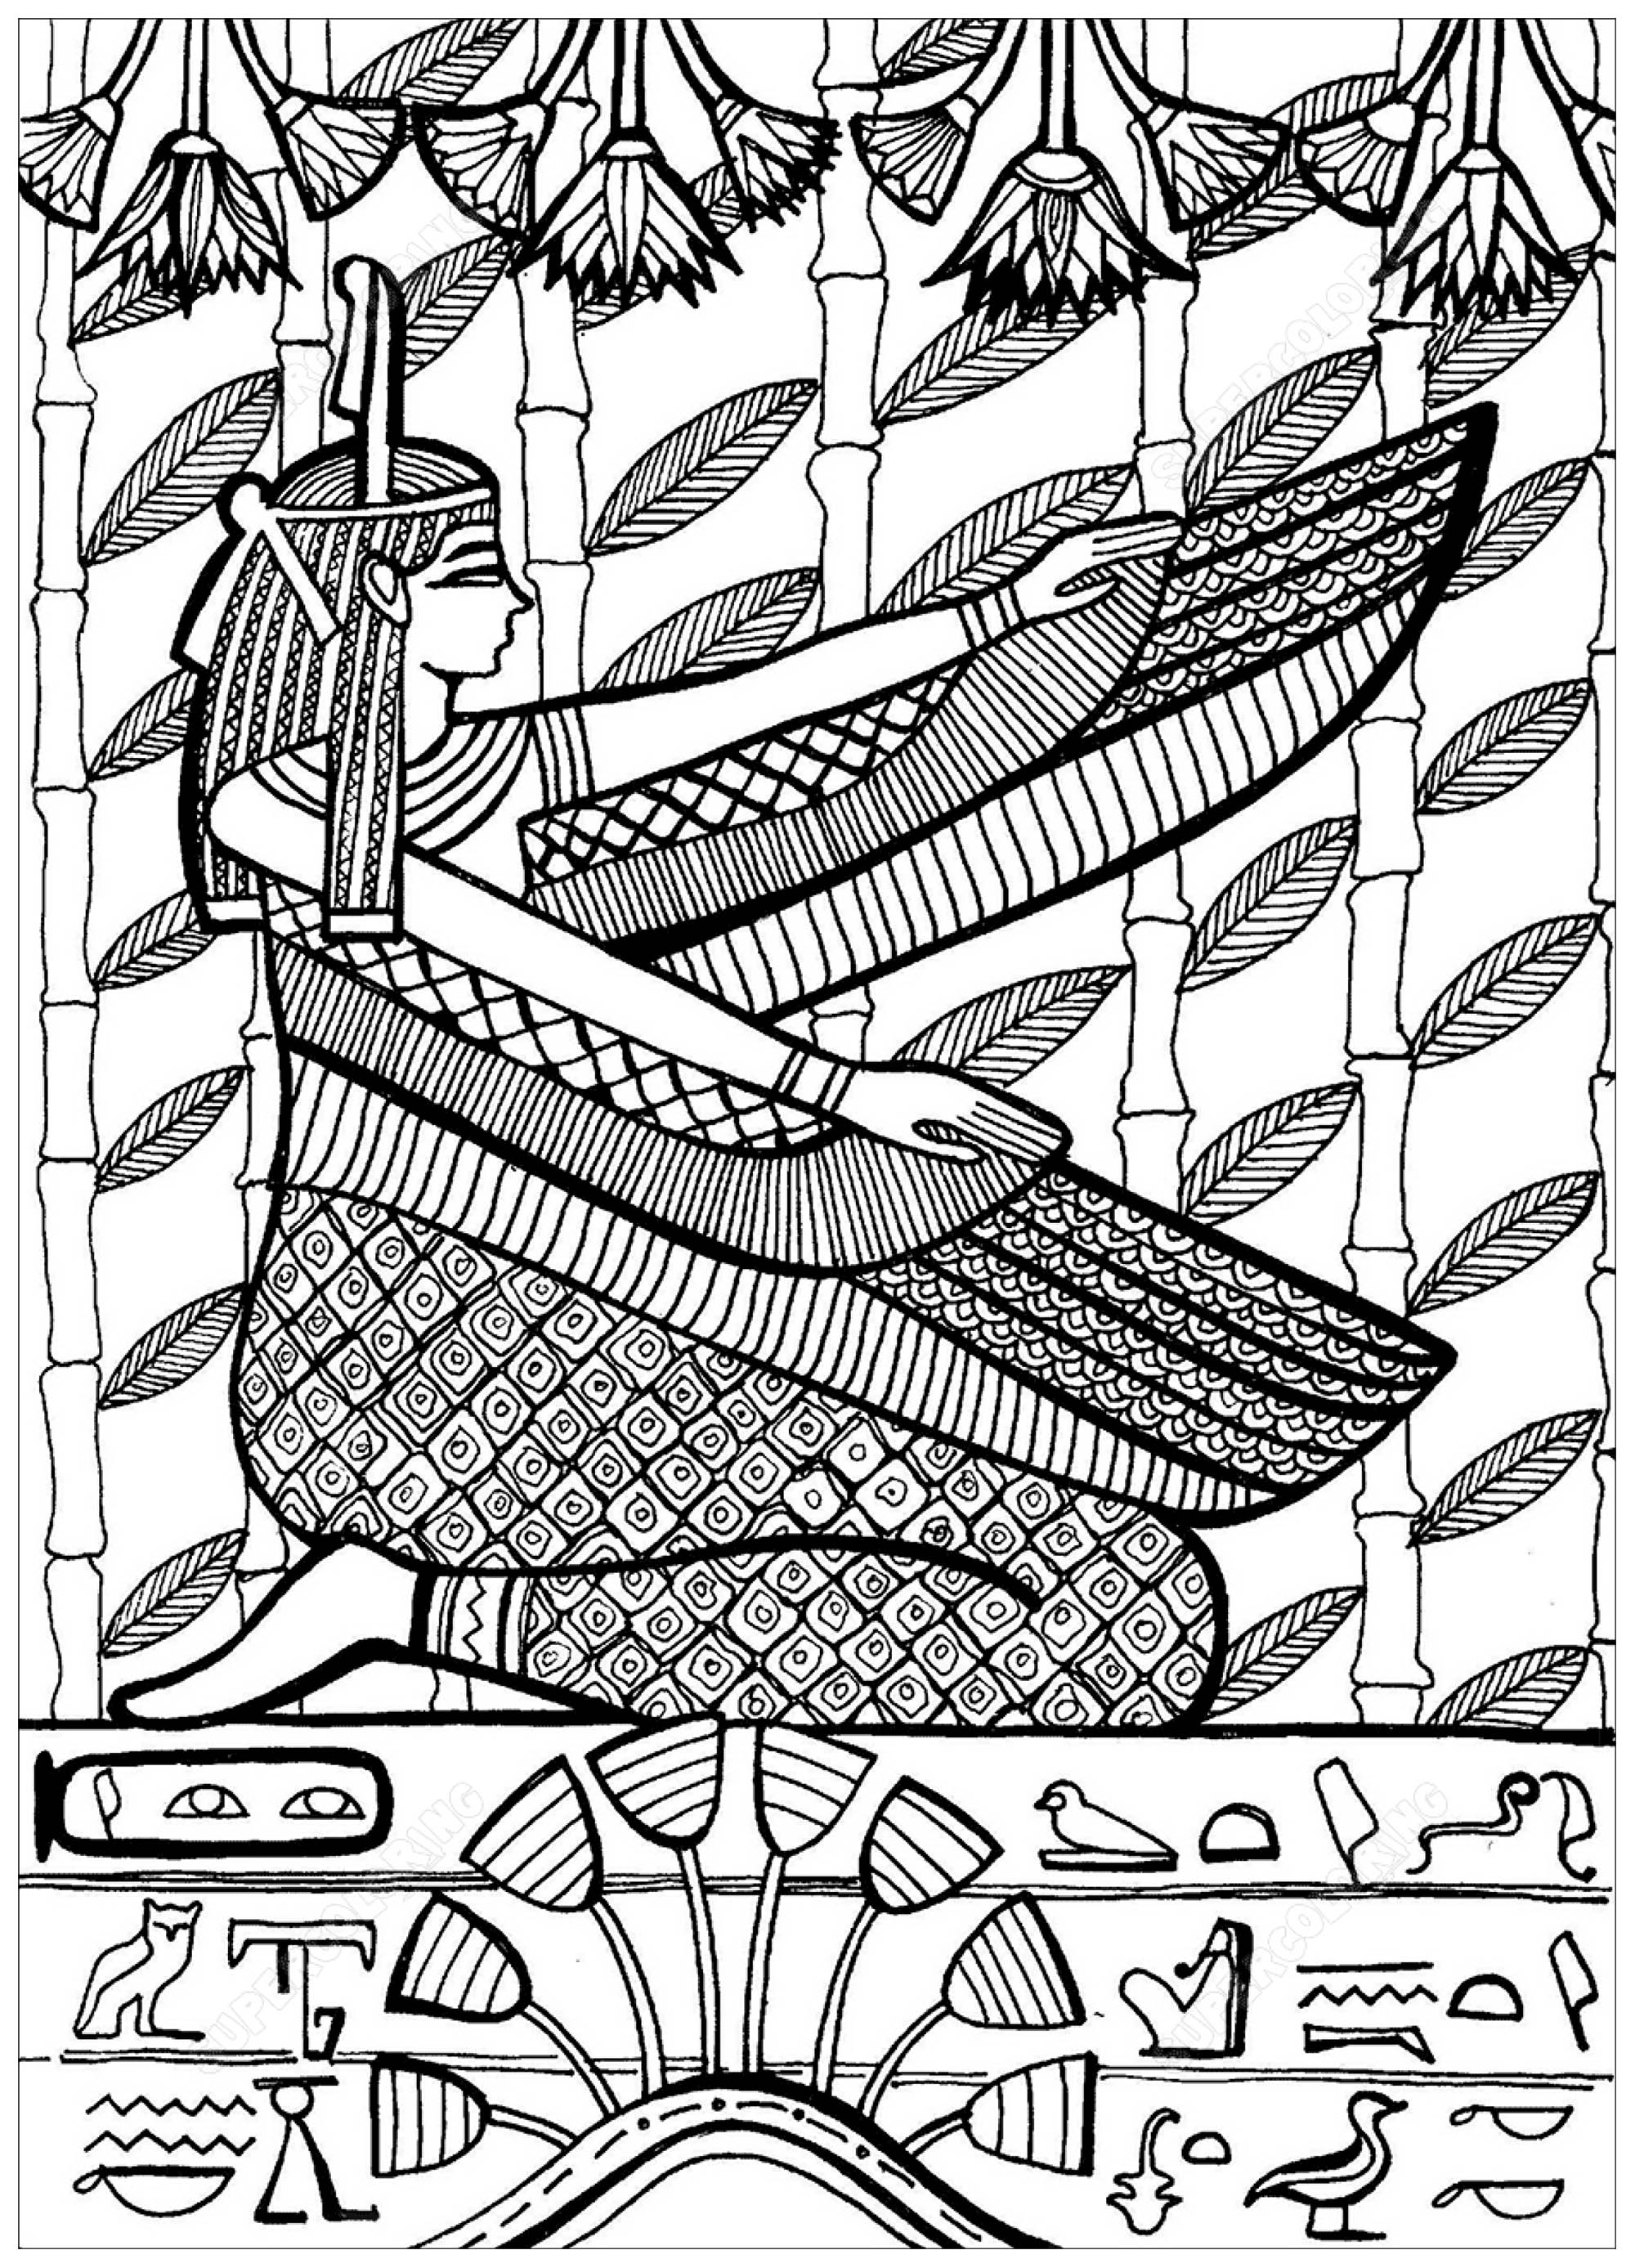 Sumo sacerdote de Ptah, o deus patrono dos artesãos